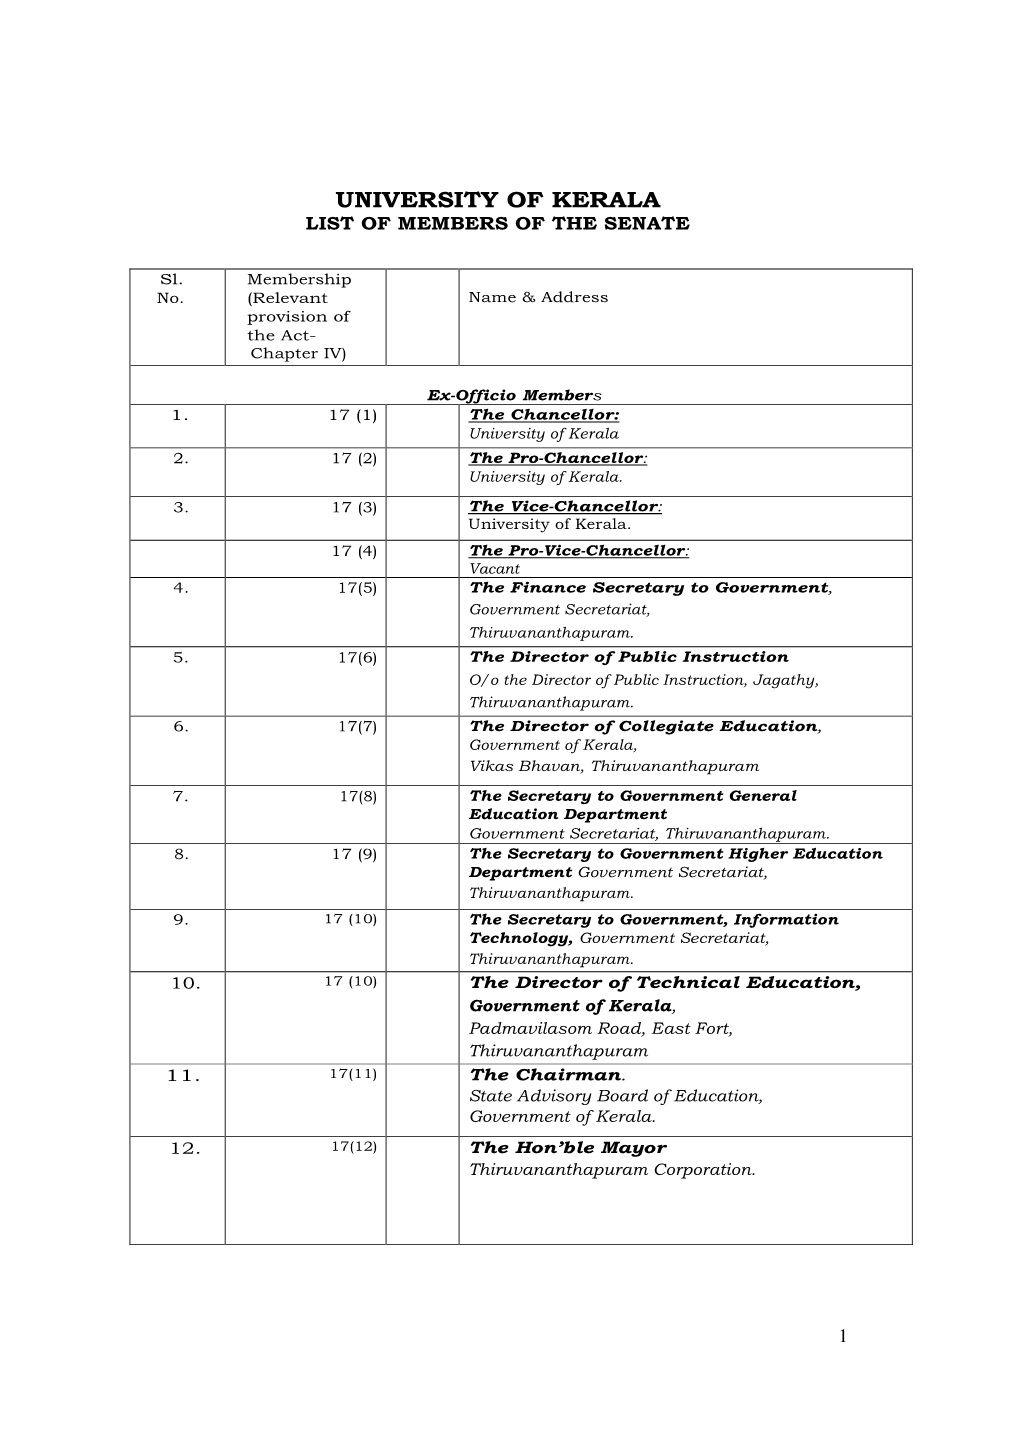 List of Members of the Senate